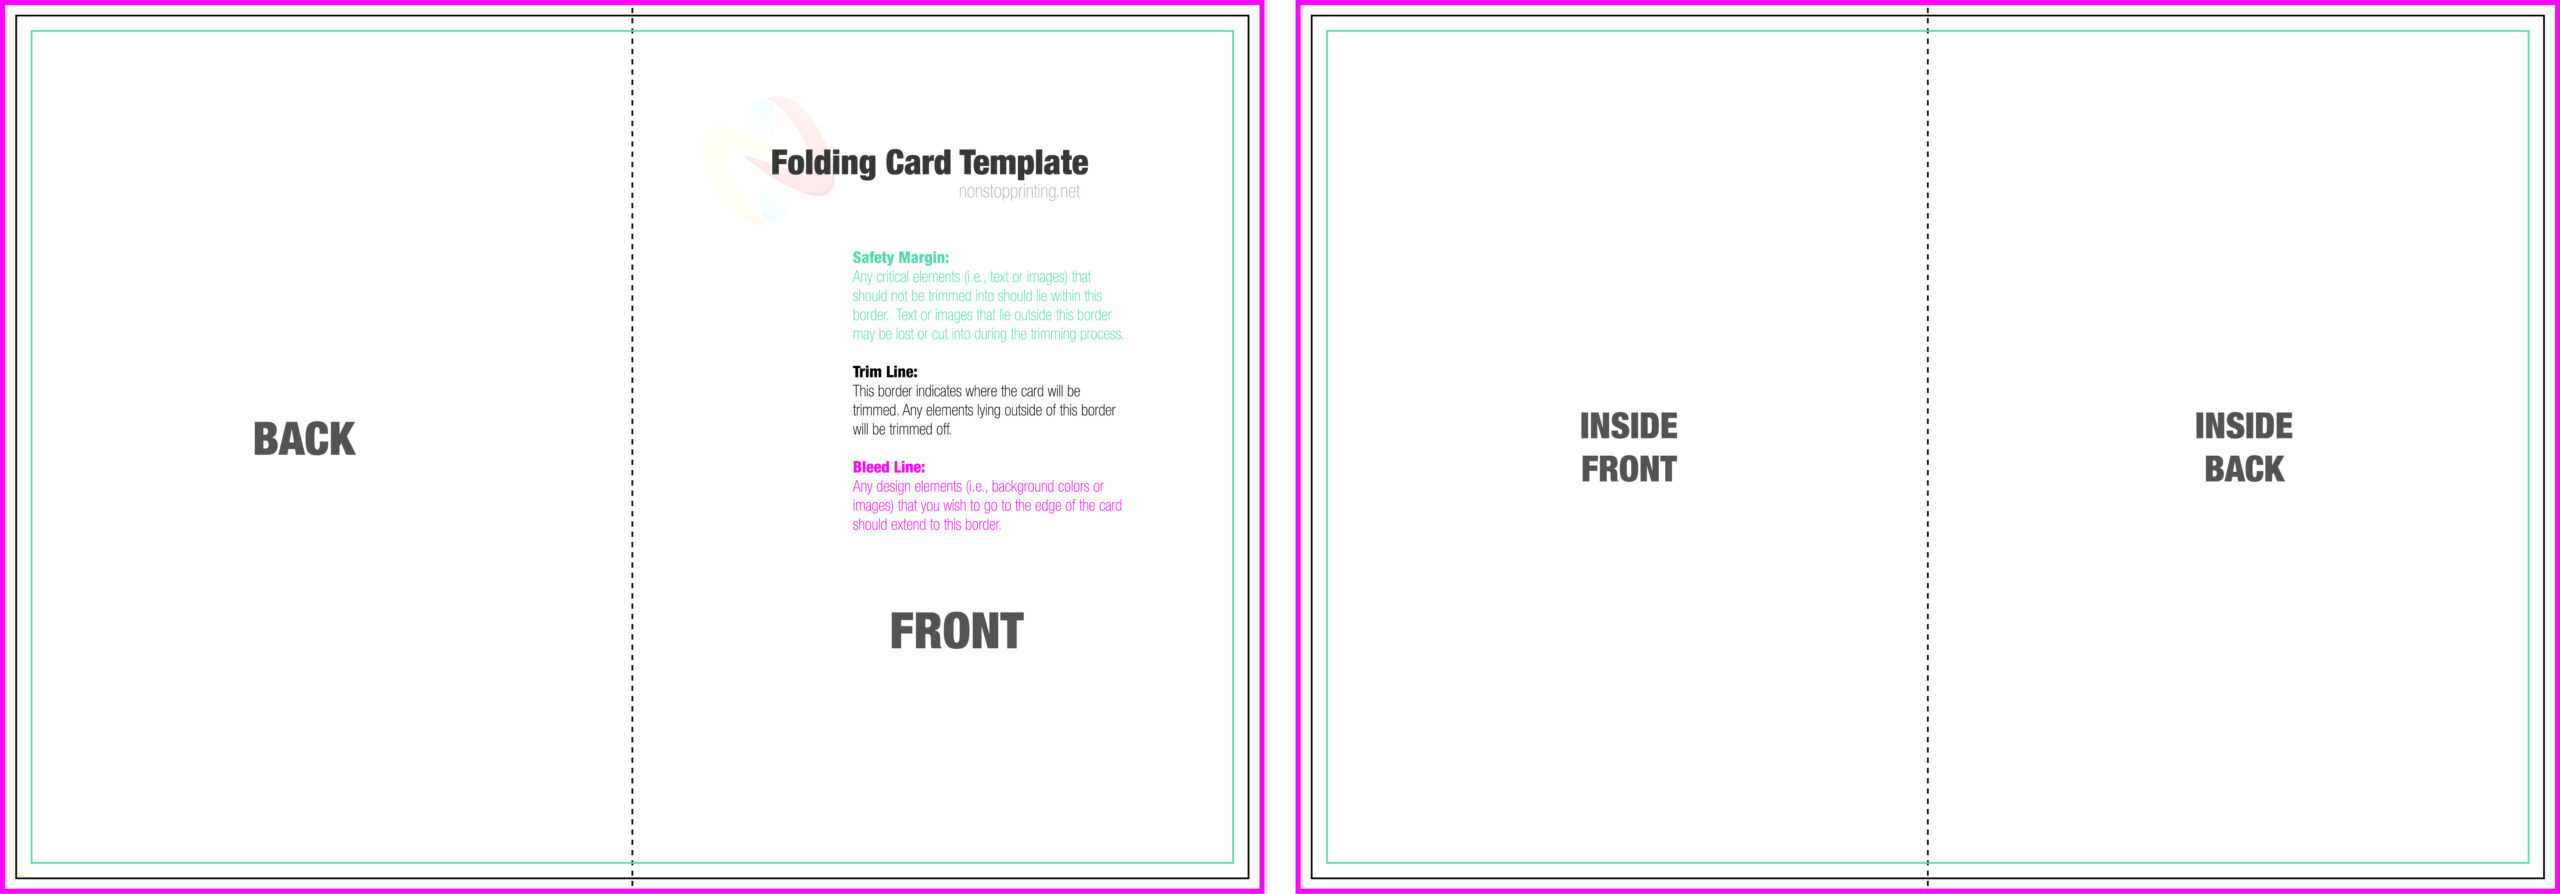 Thealmanac/g/004 Blank Quarter Fold Card Templ With Regard To Blank Quarter Fold Card Template